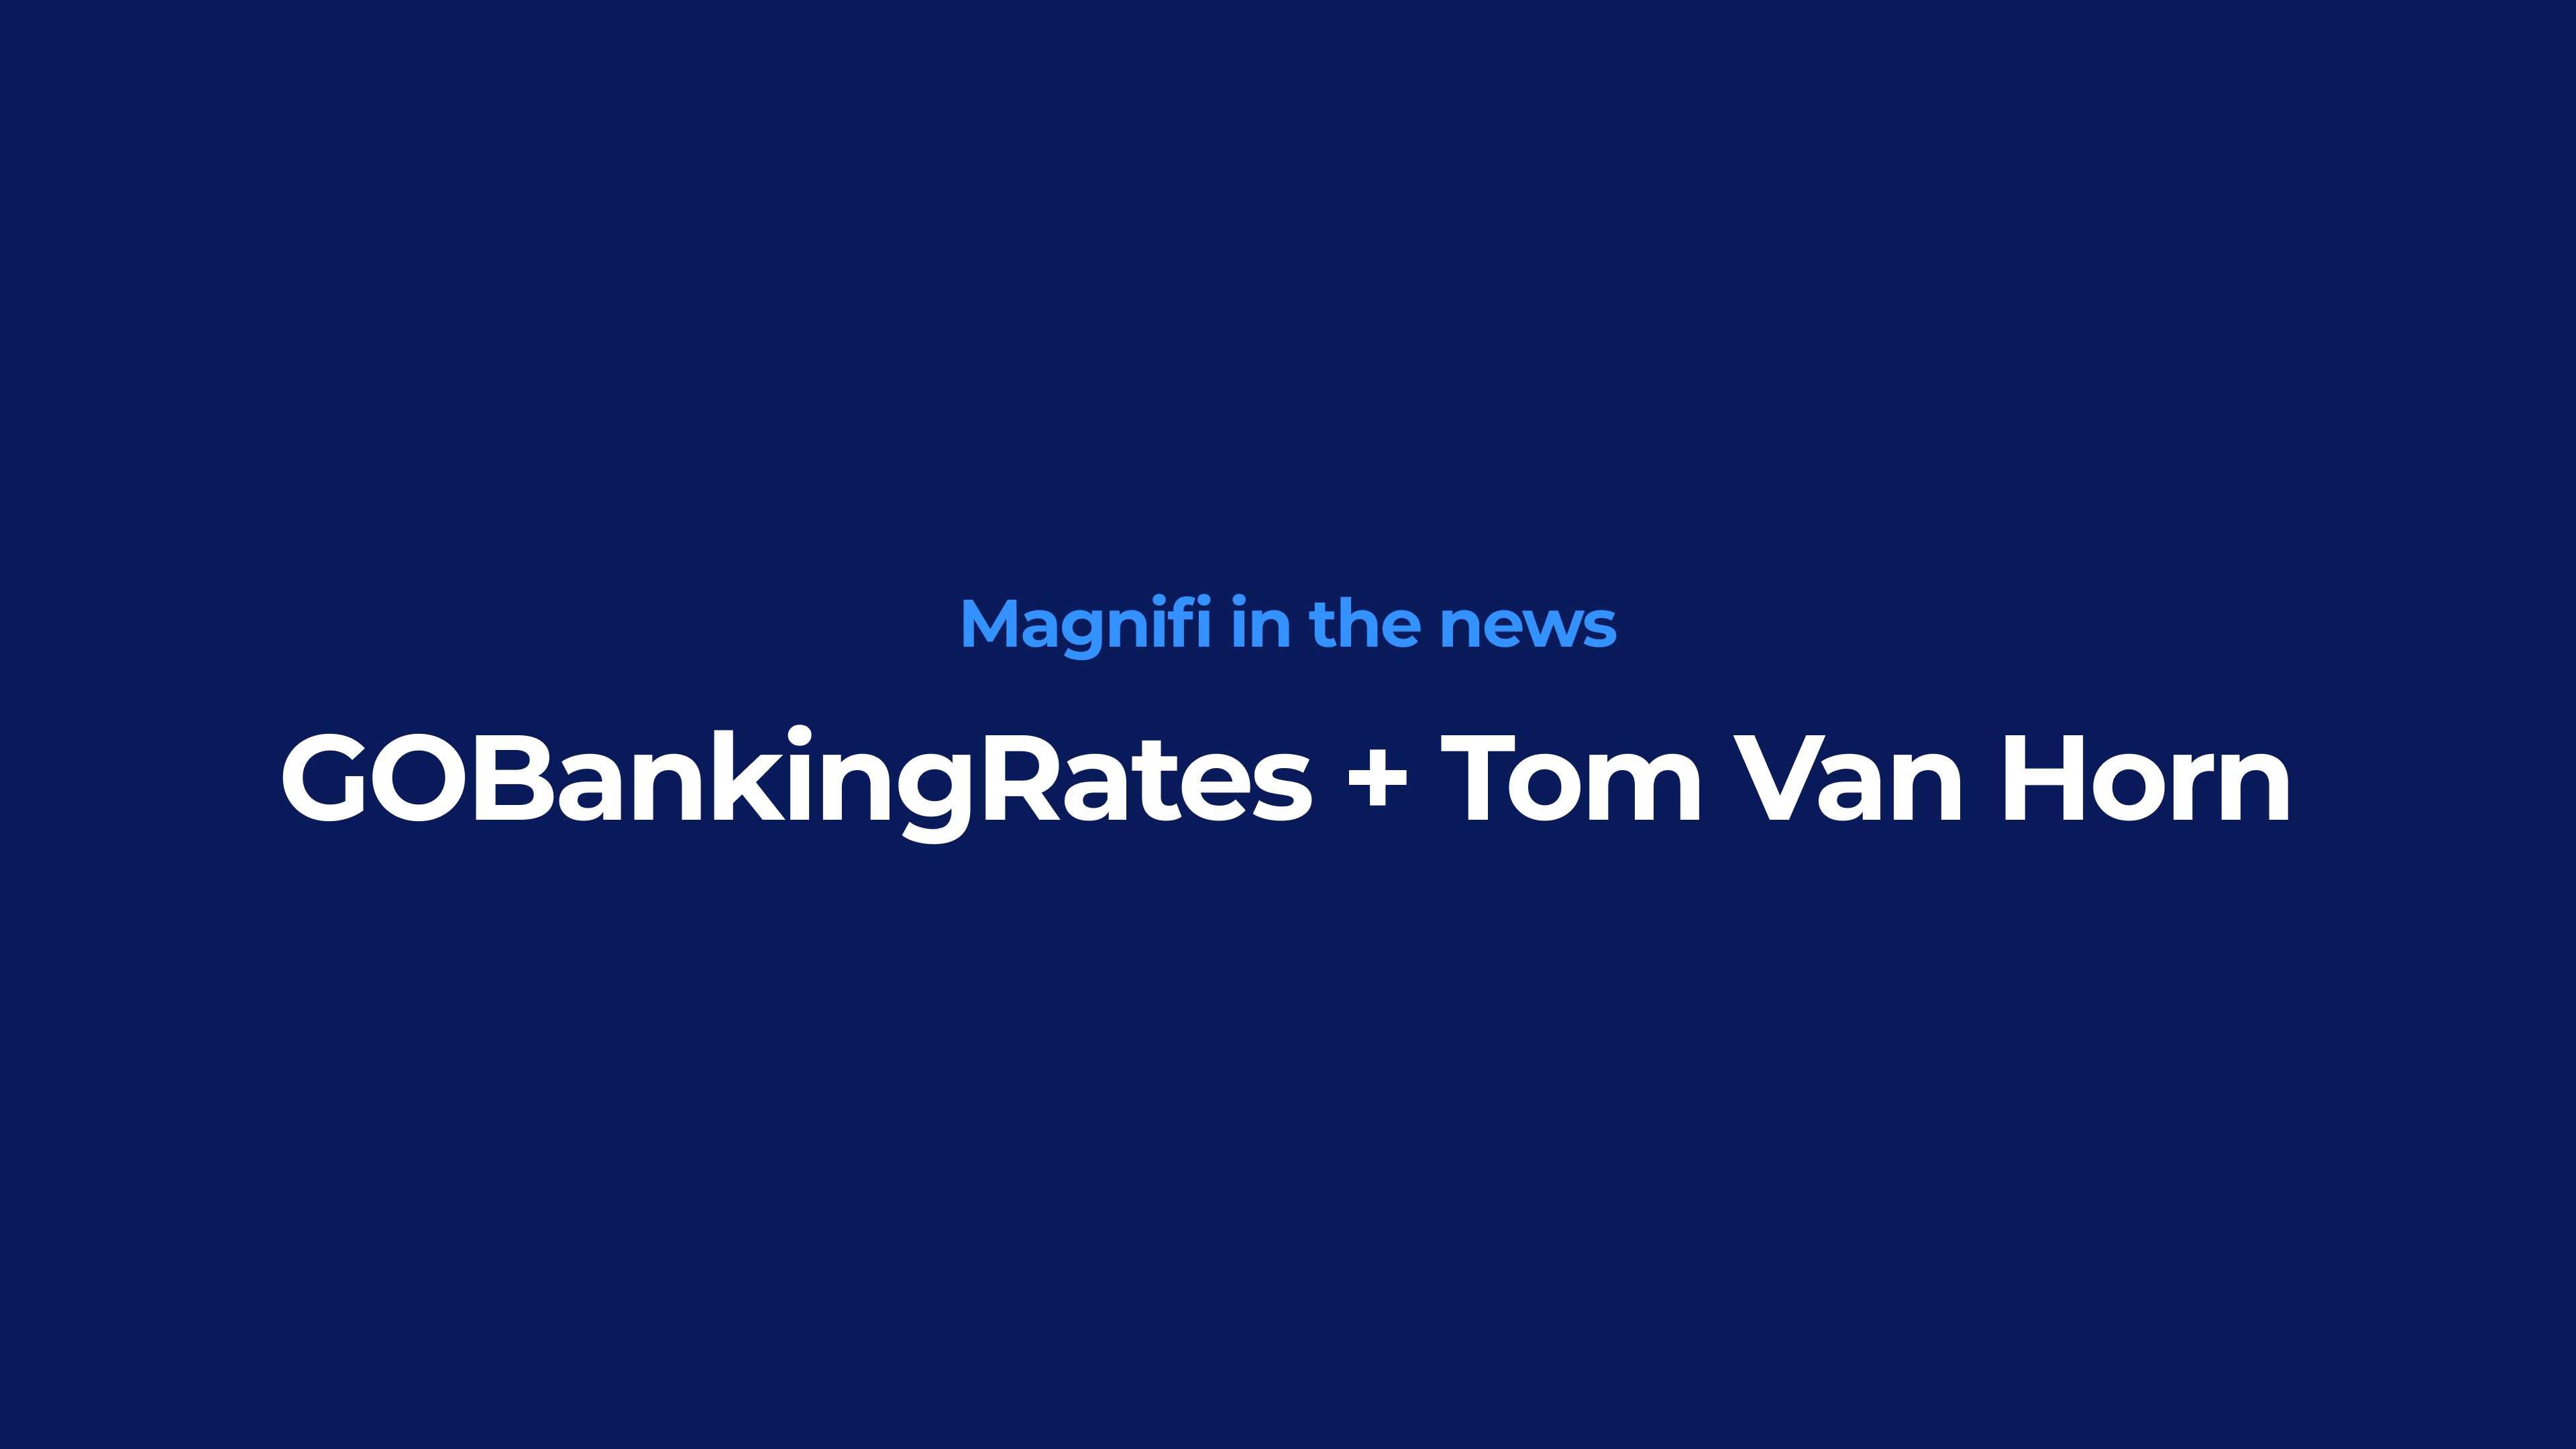 Magnifi in the news
GOBankingRates + Tom Van Horn